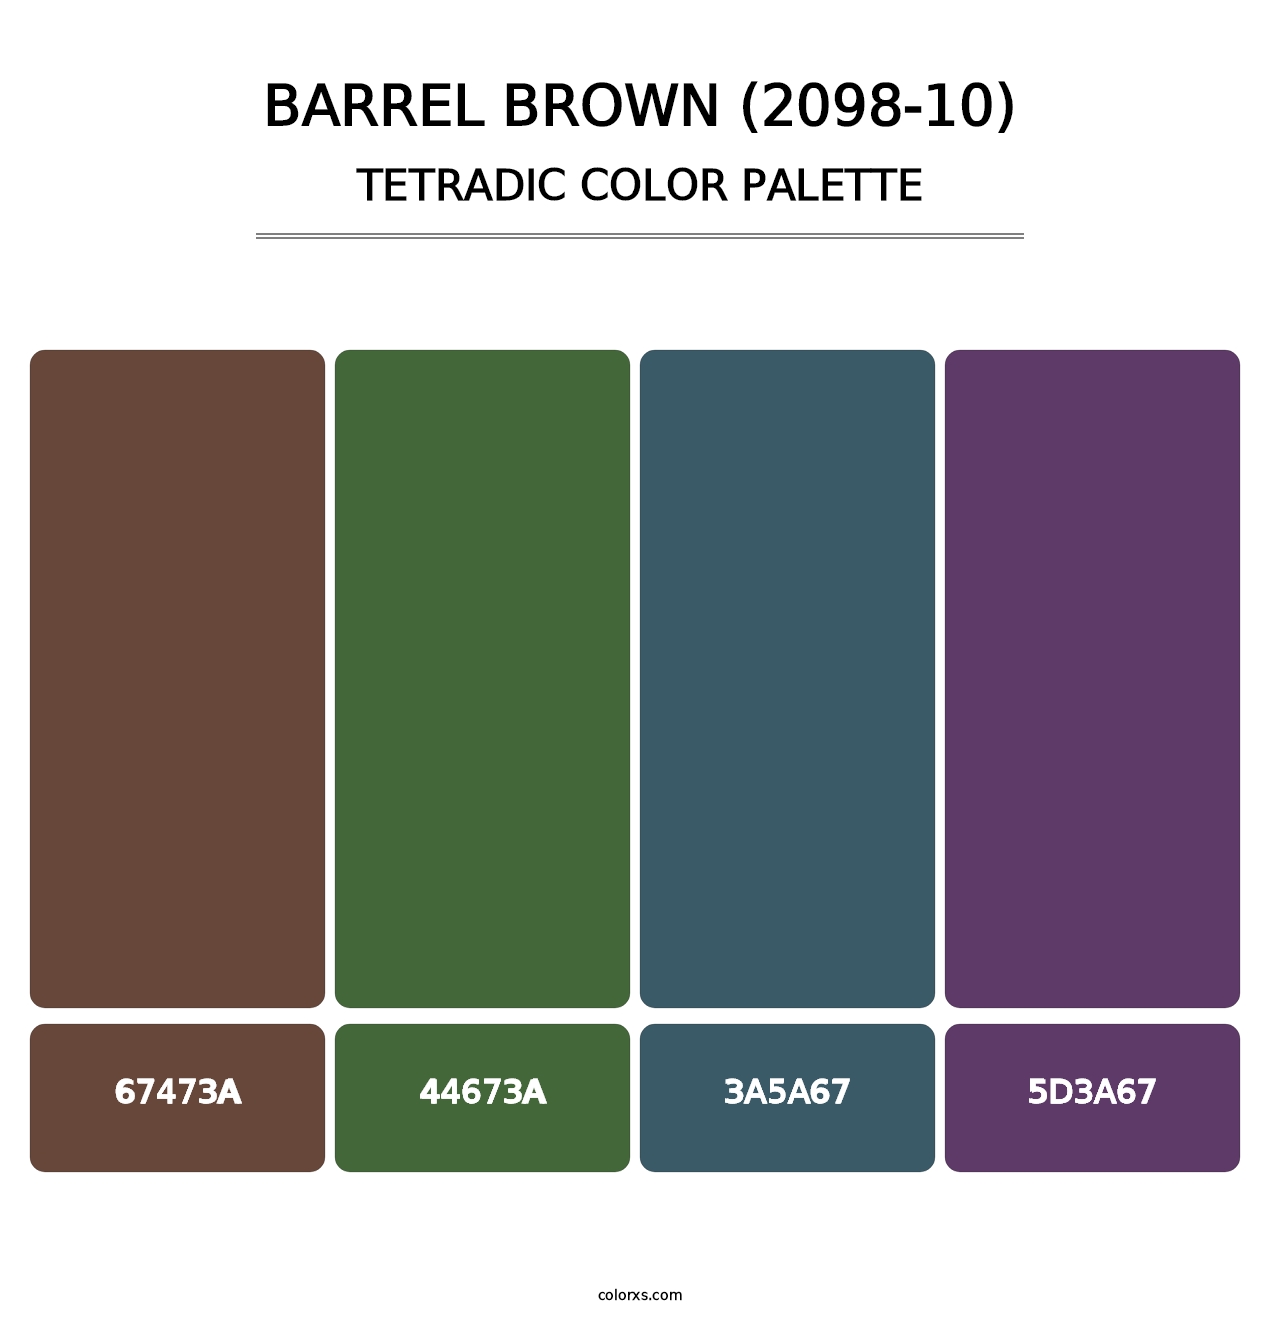 Barrel Brown (2098-10) - Tetradic Color Palette